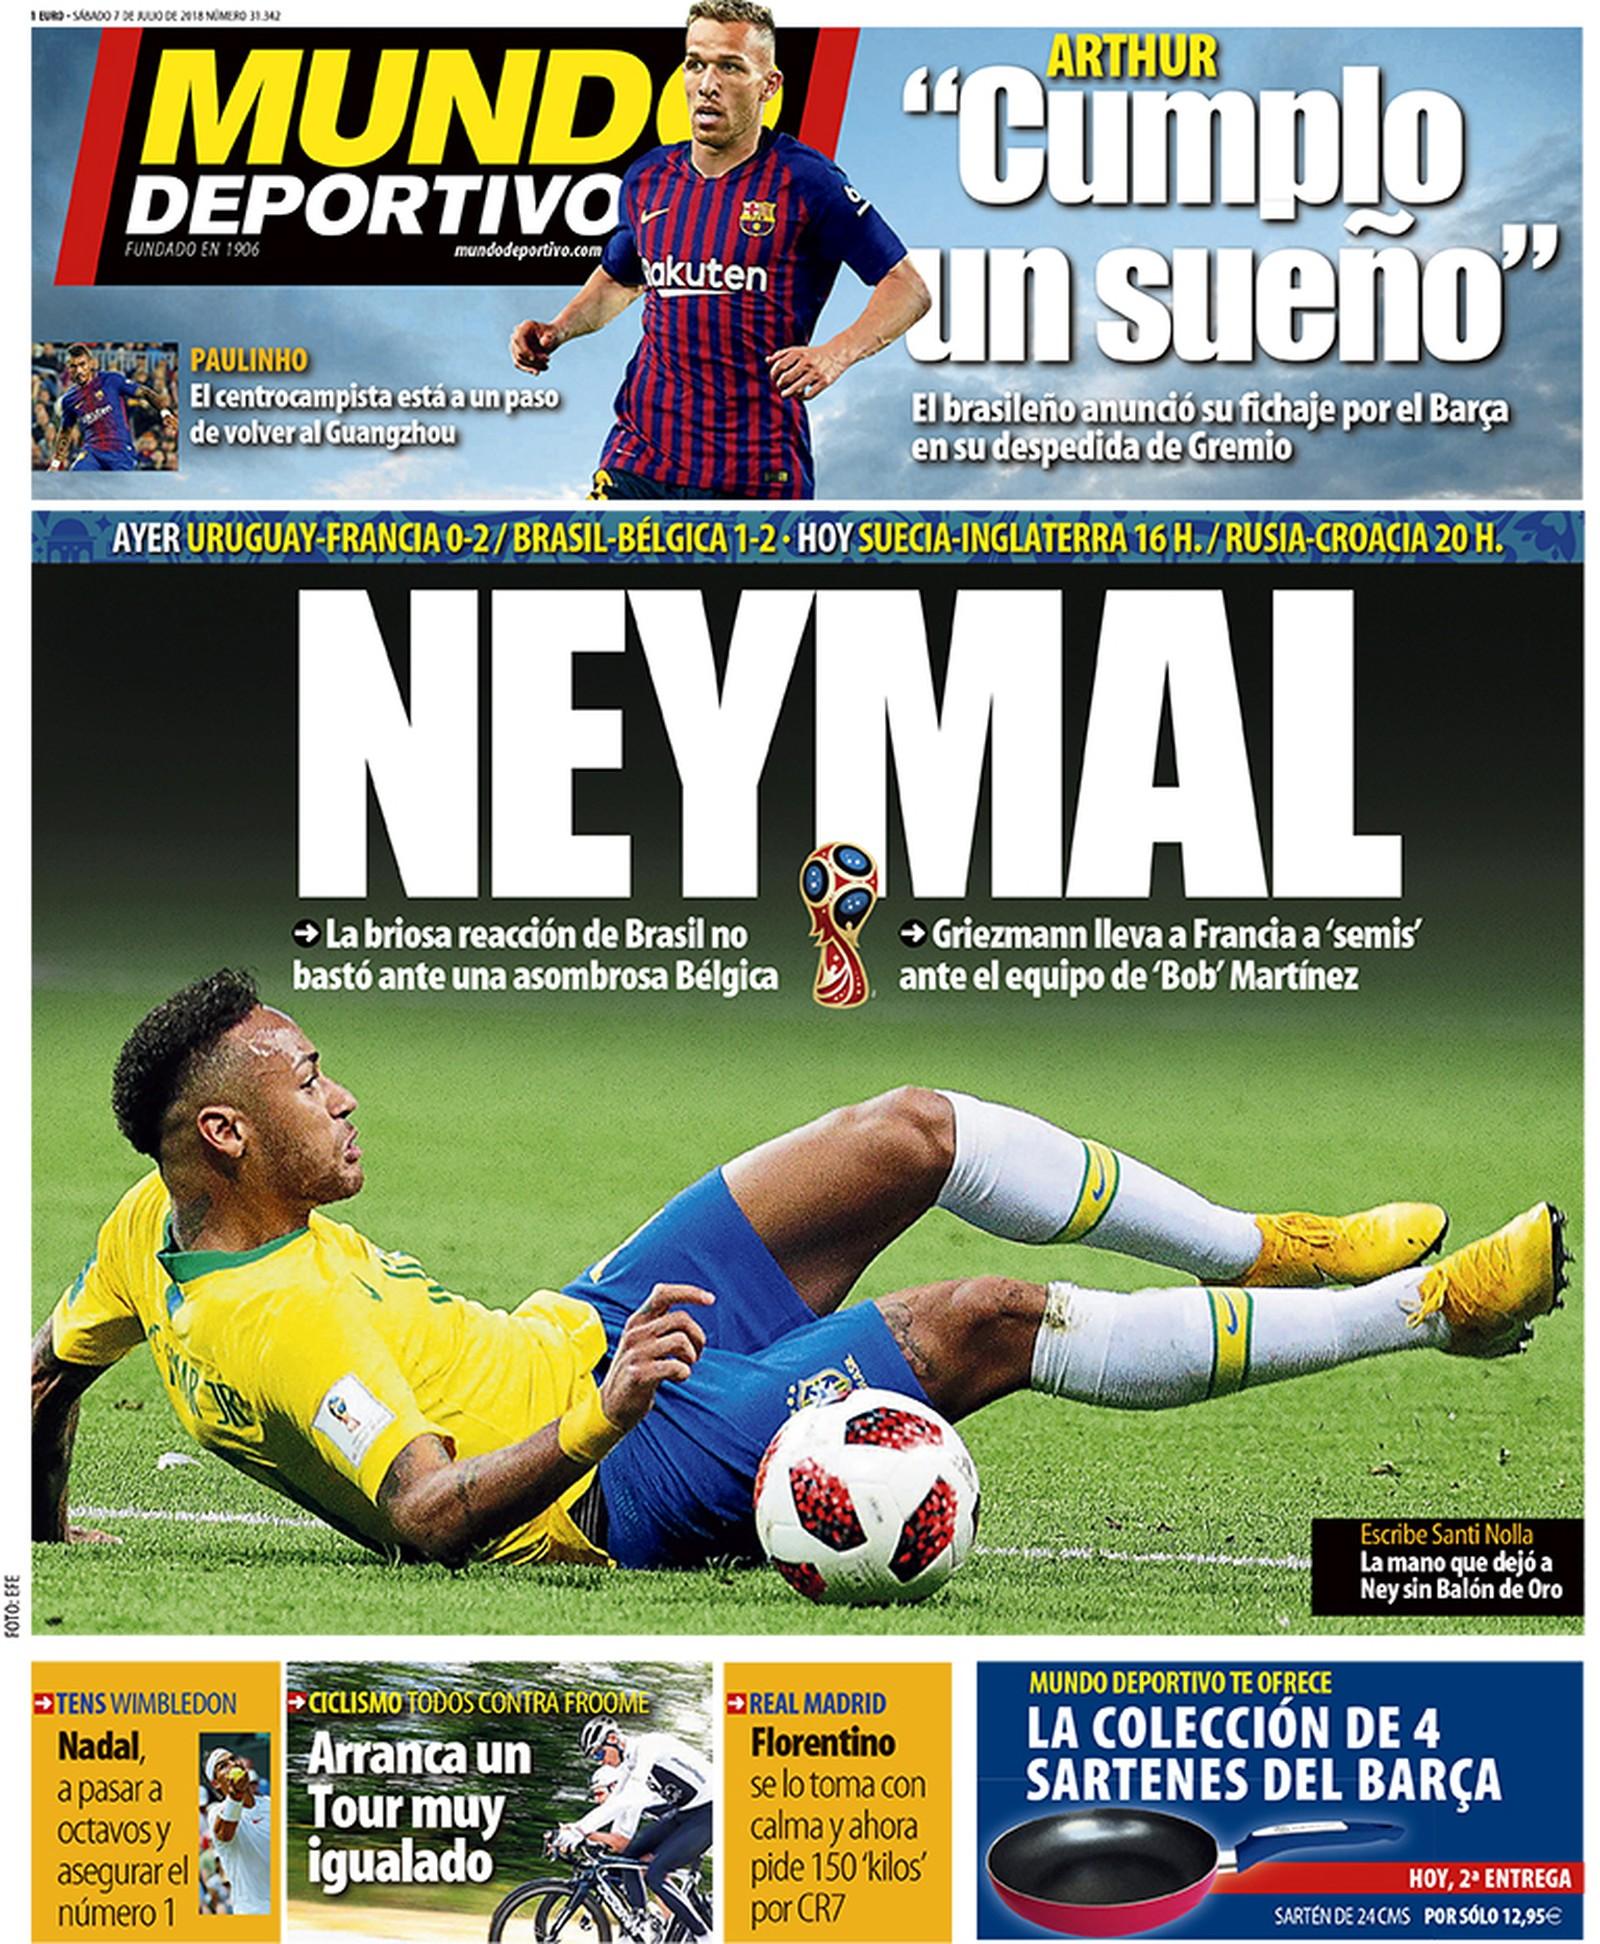 Jornais criticam Neymar